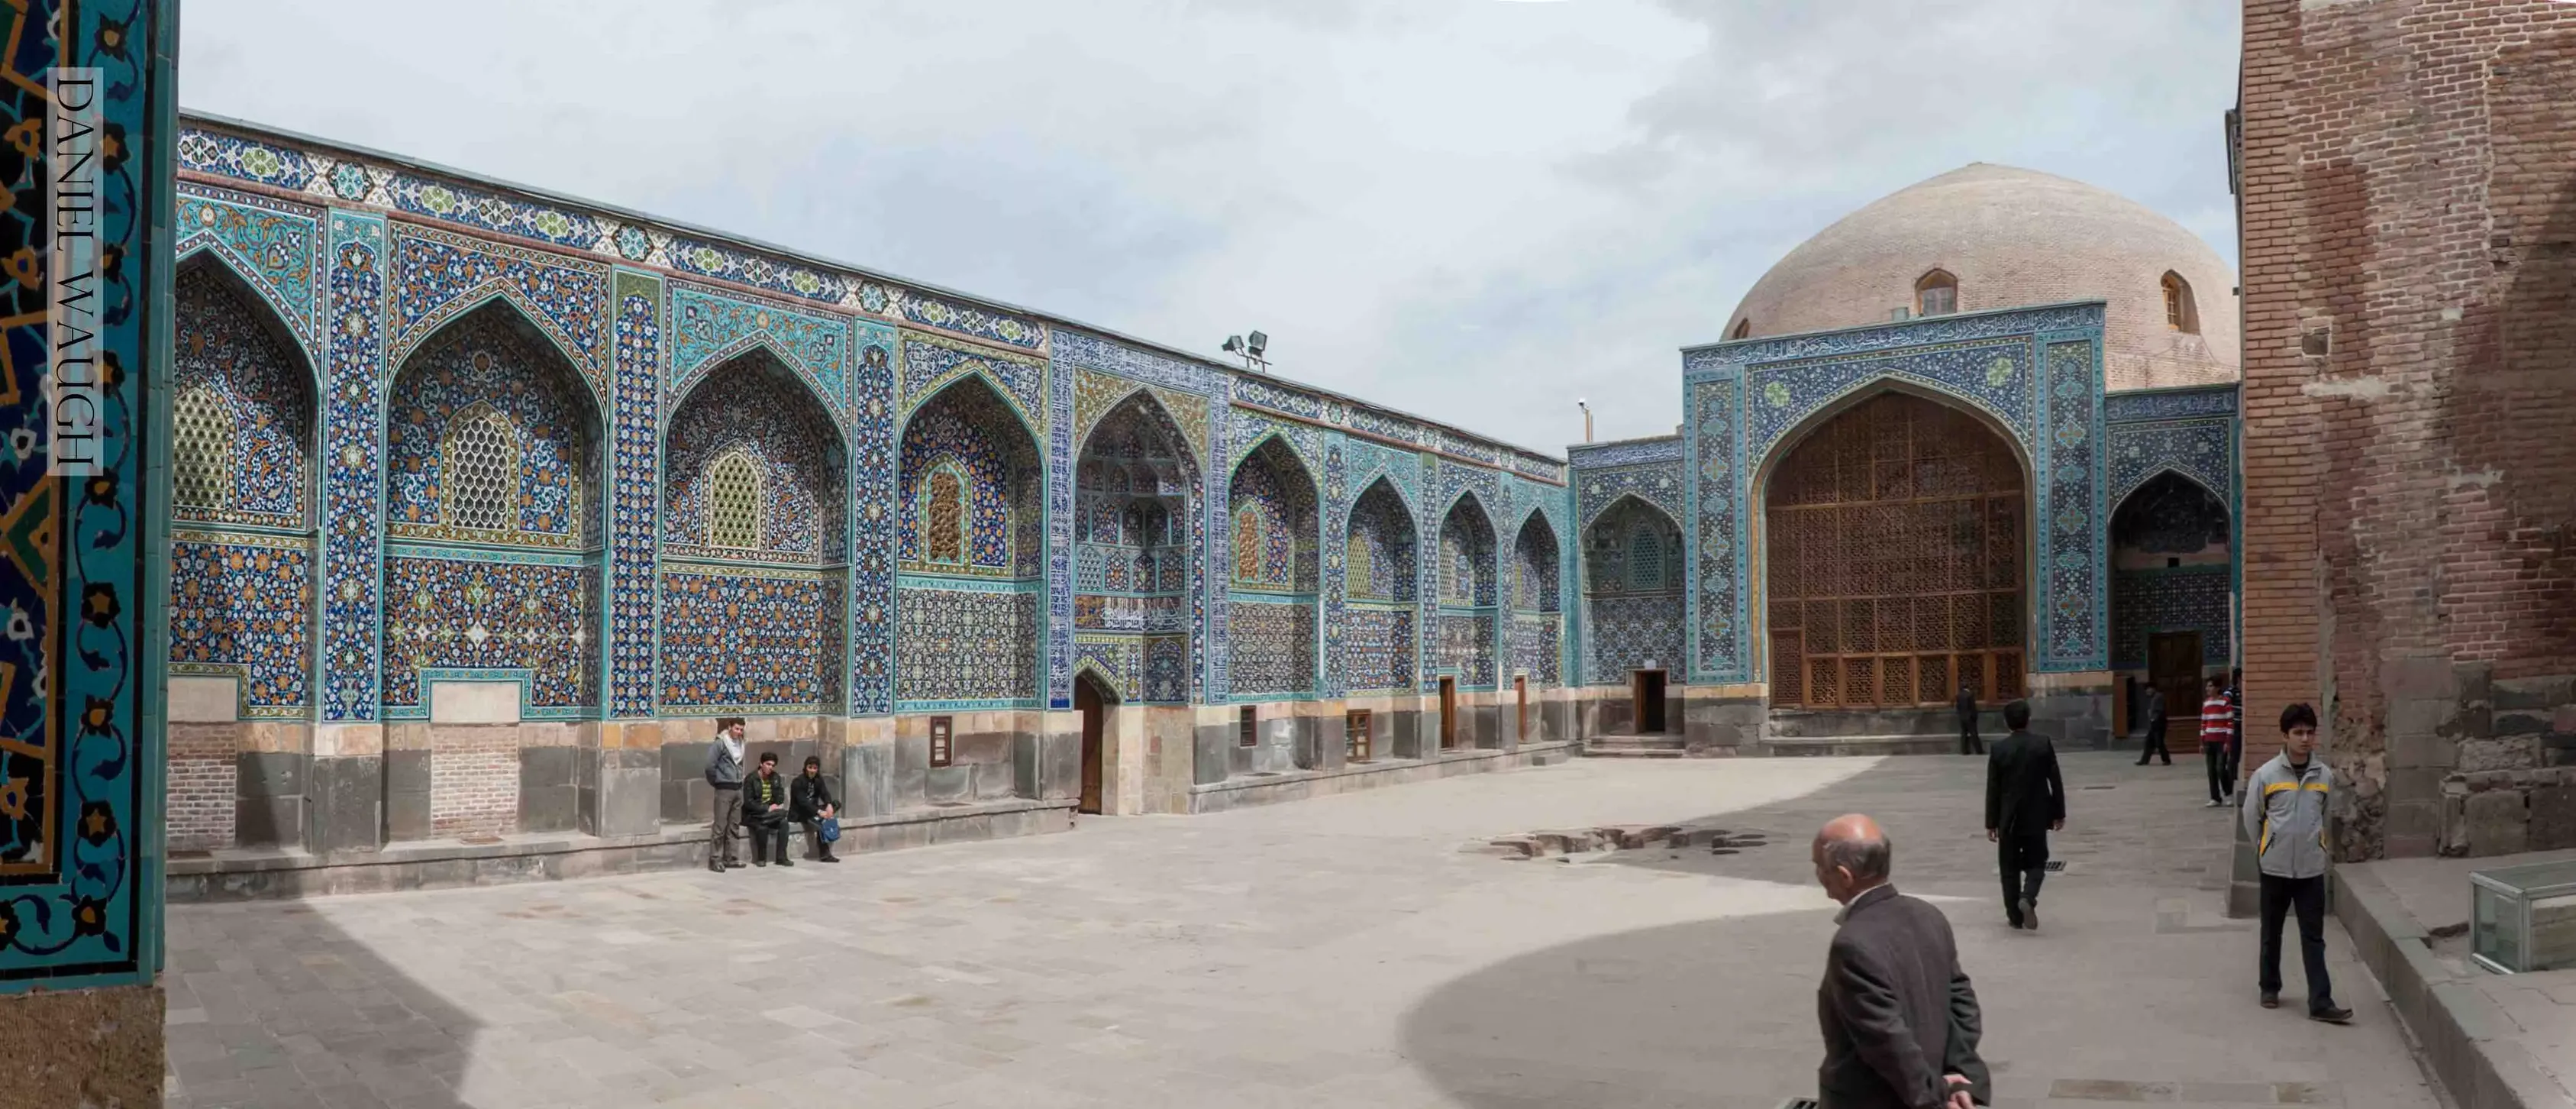 Ardabil | Ardabil Province Region, Iran - Rated 4.1